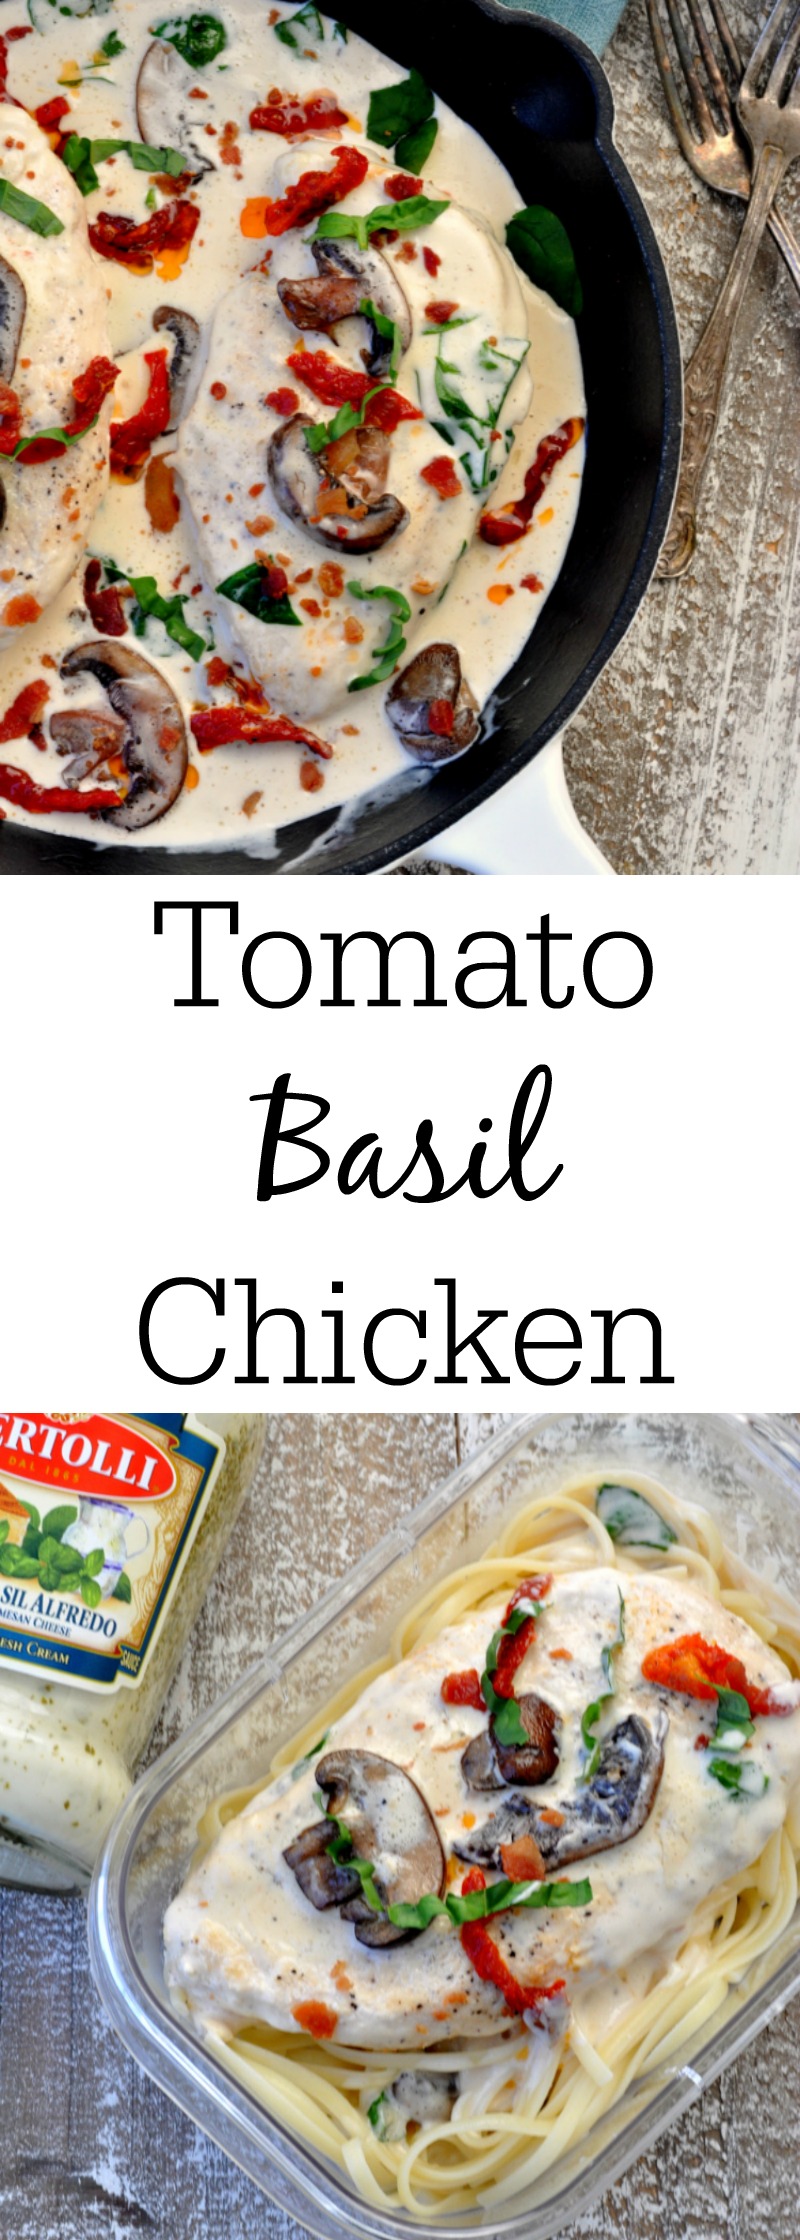 Tomato Basil Chicken Skillet